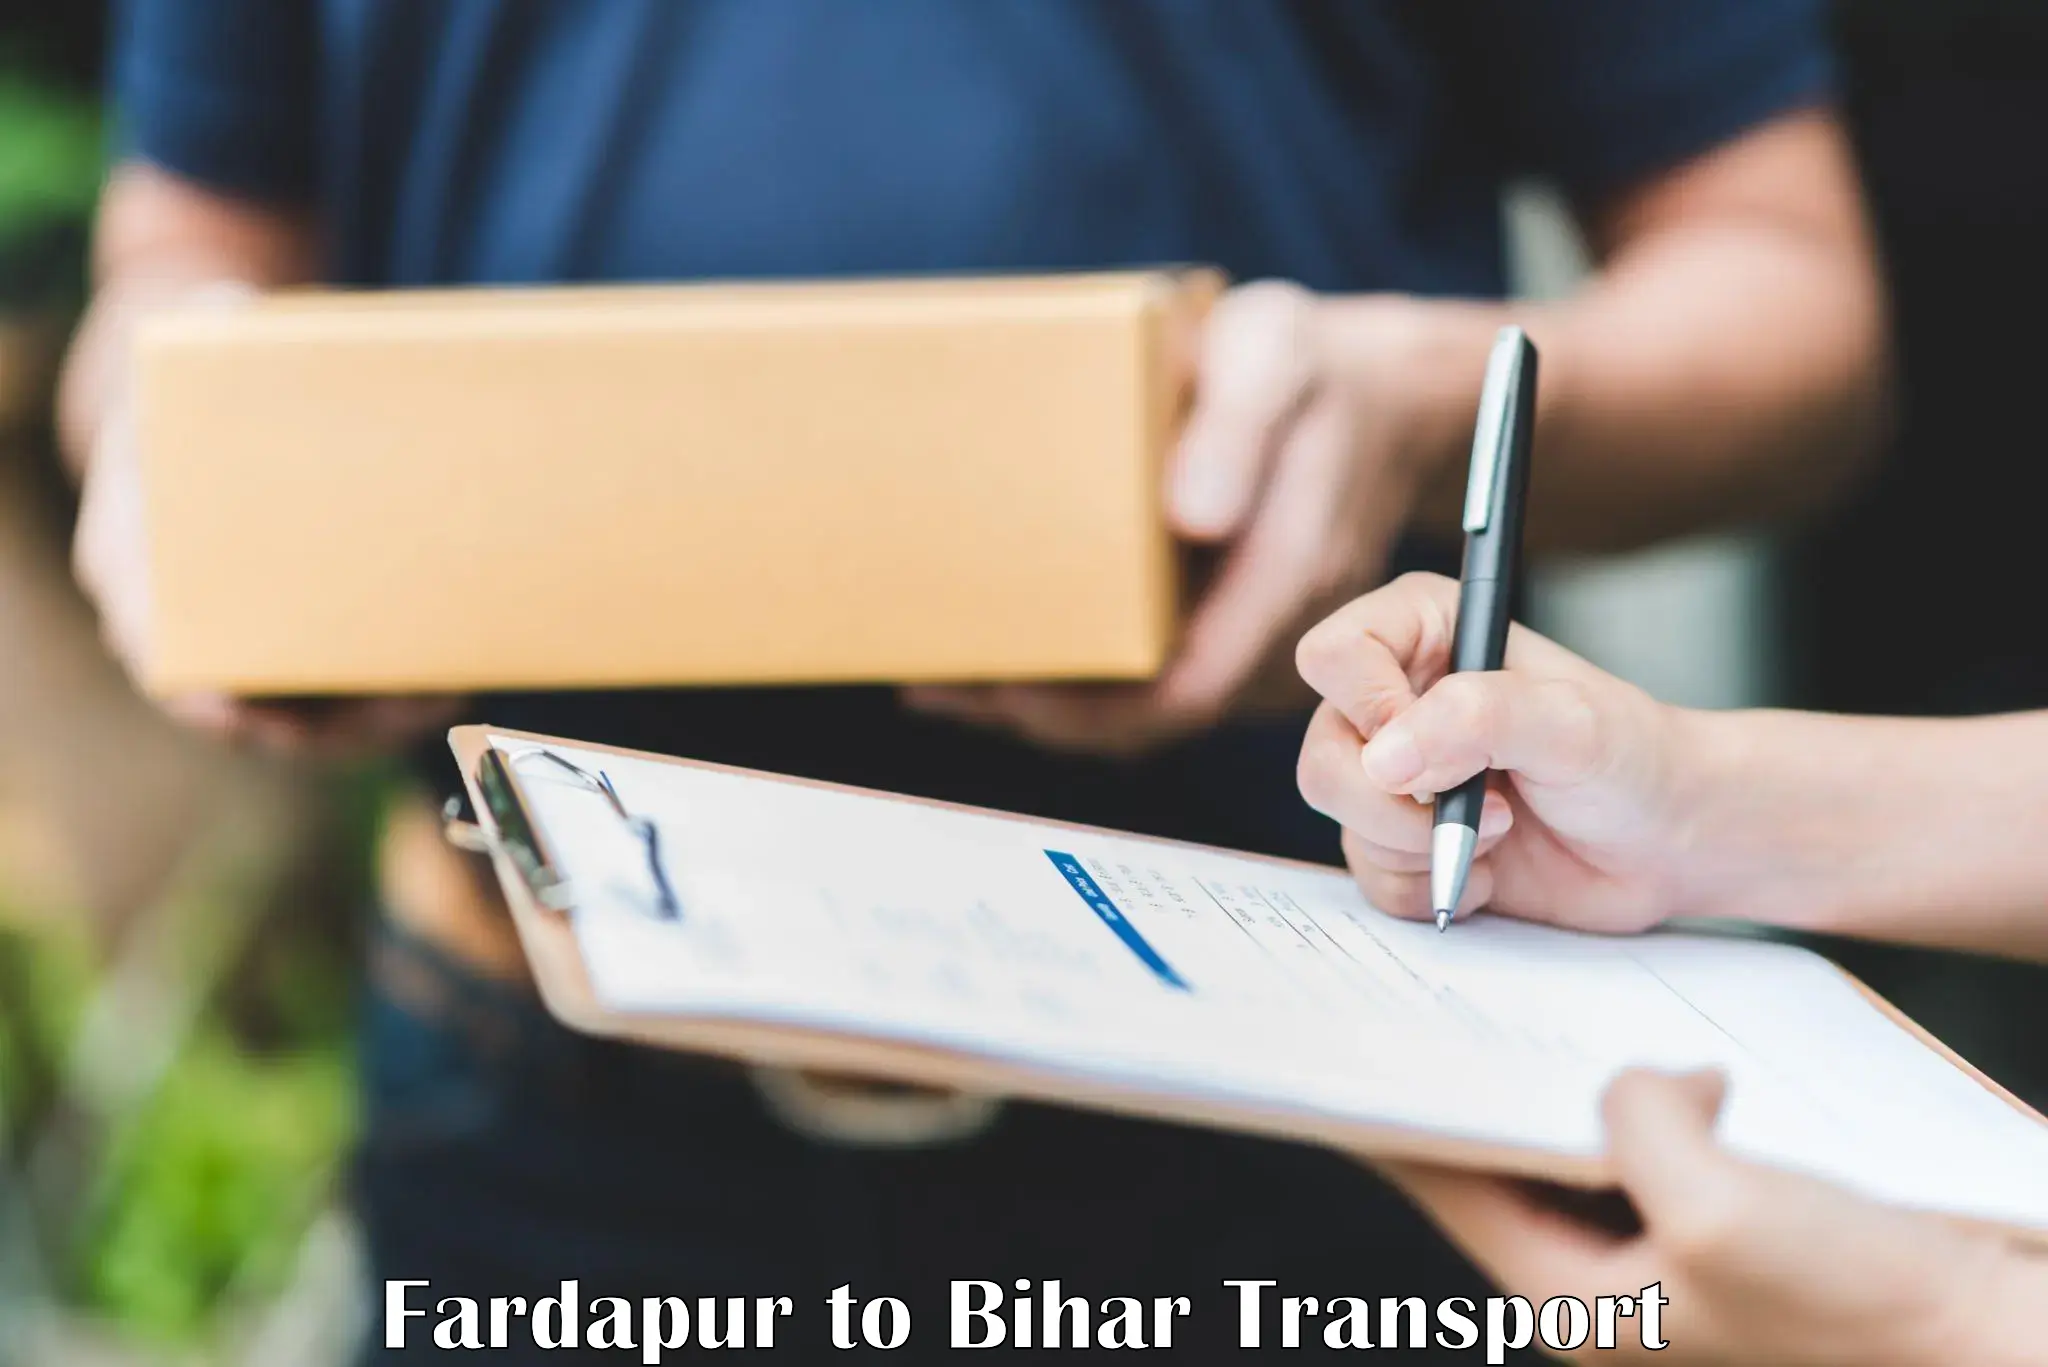 Online transport Fardapur to Baniapur